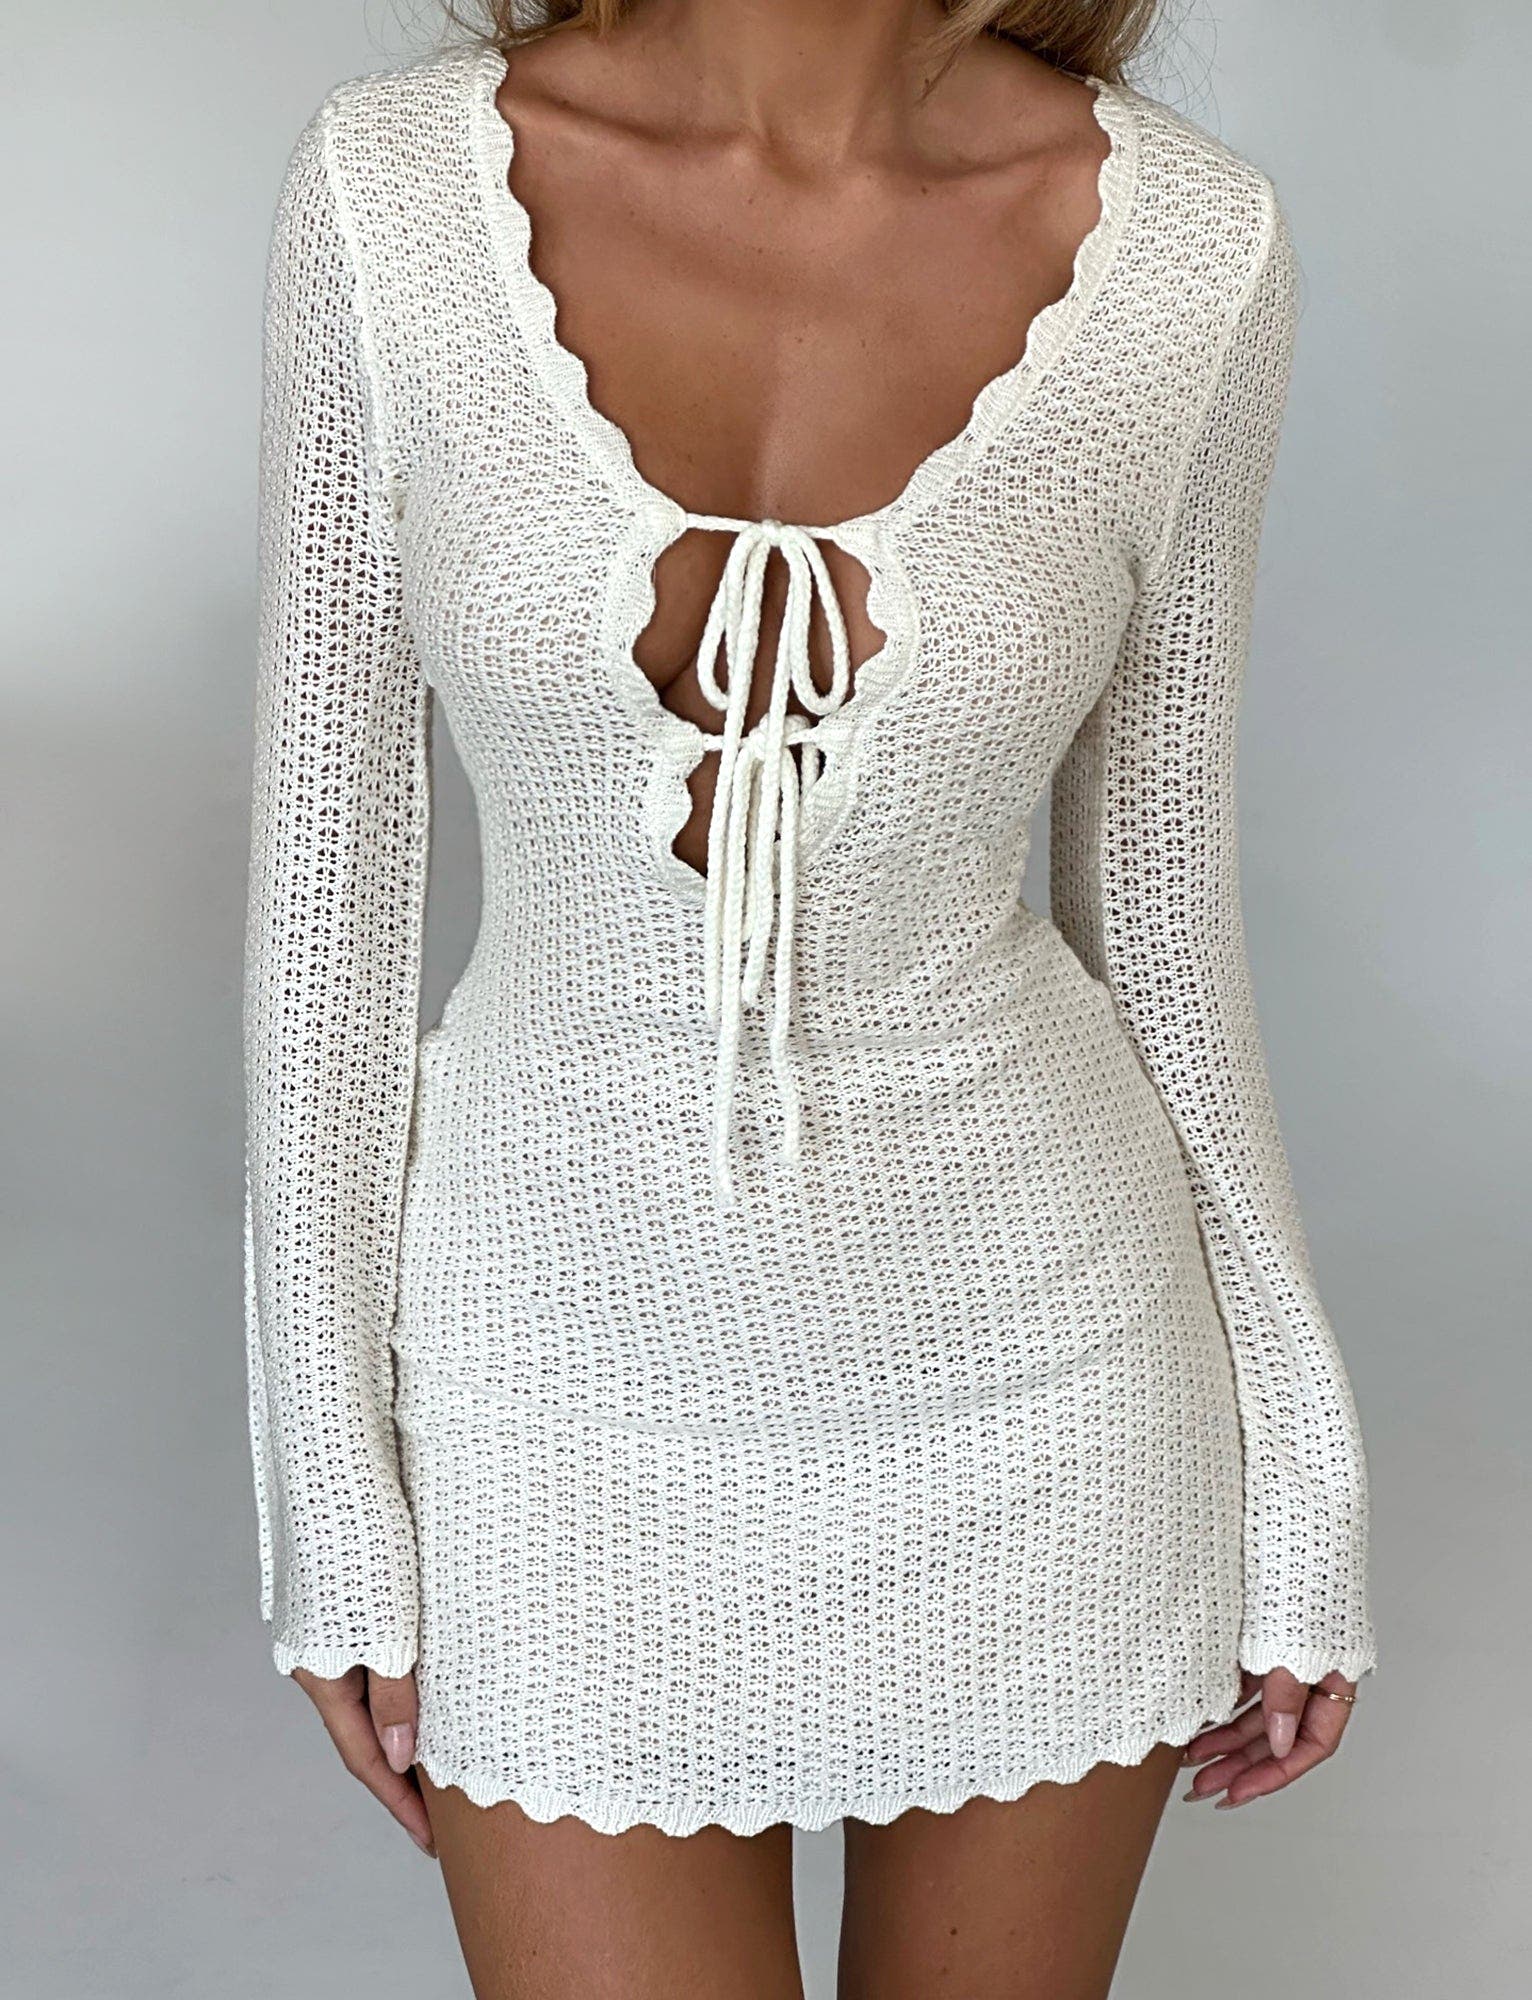 TEREZA DRESS - WHITE